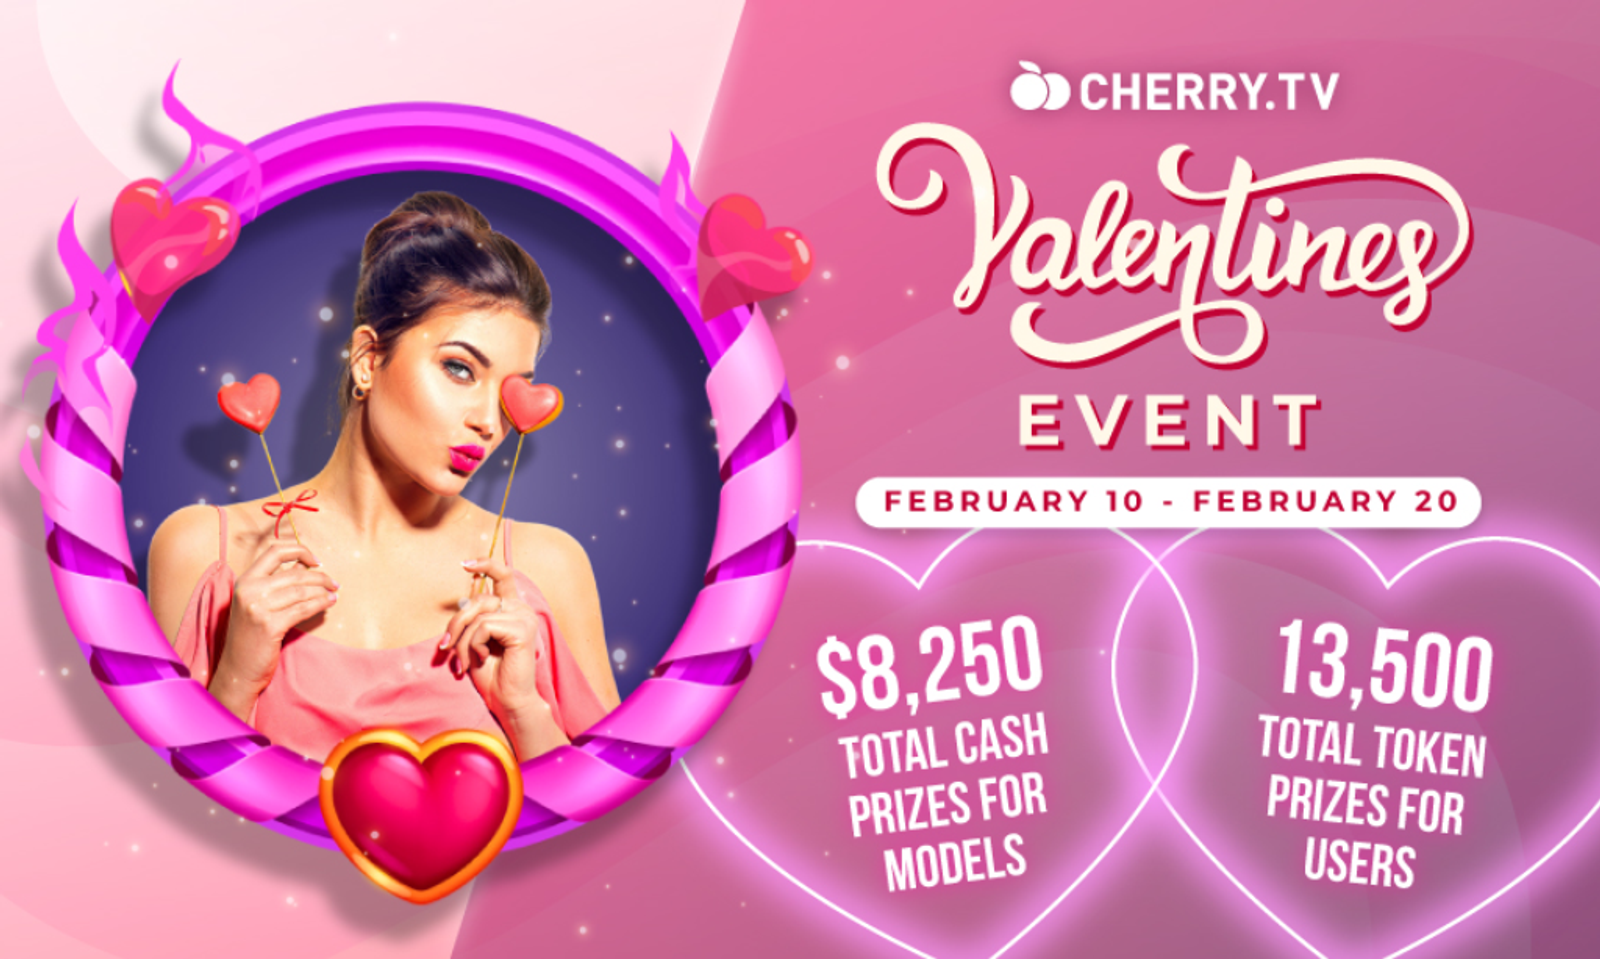 Cherry.tv Announces Valentine’s Day Contest